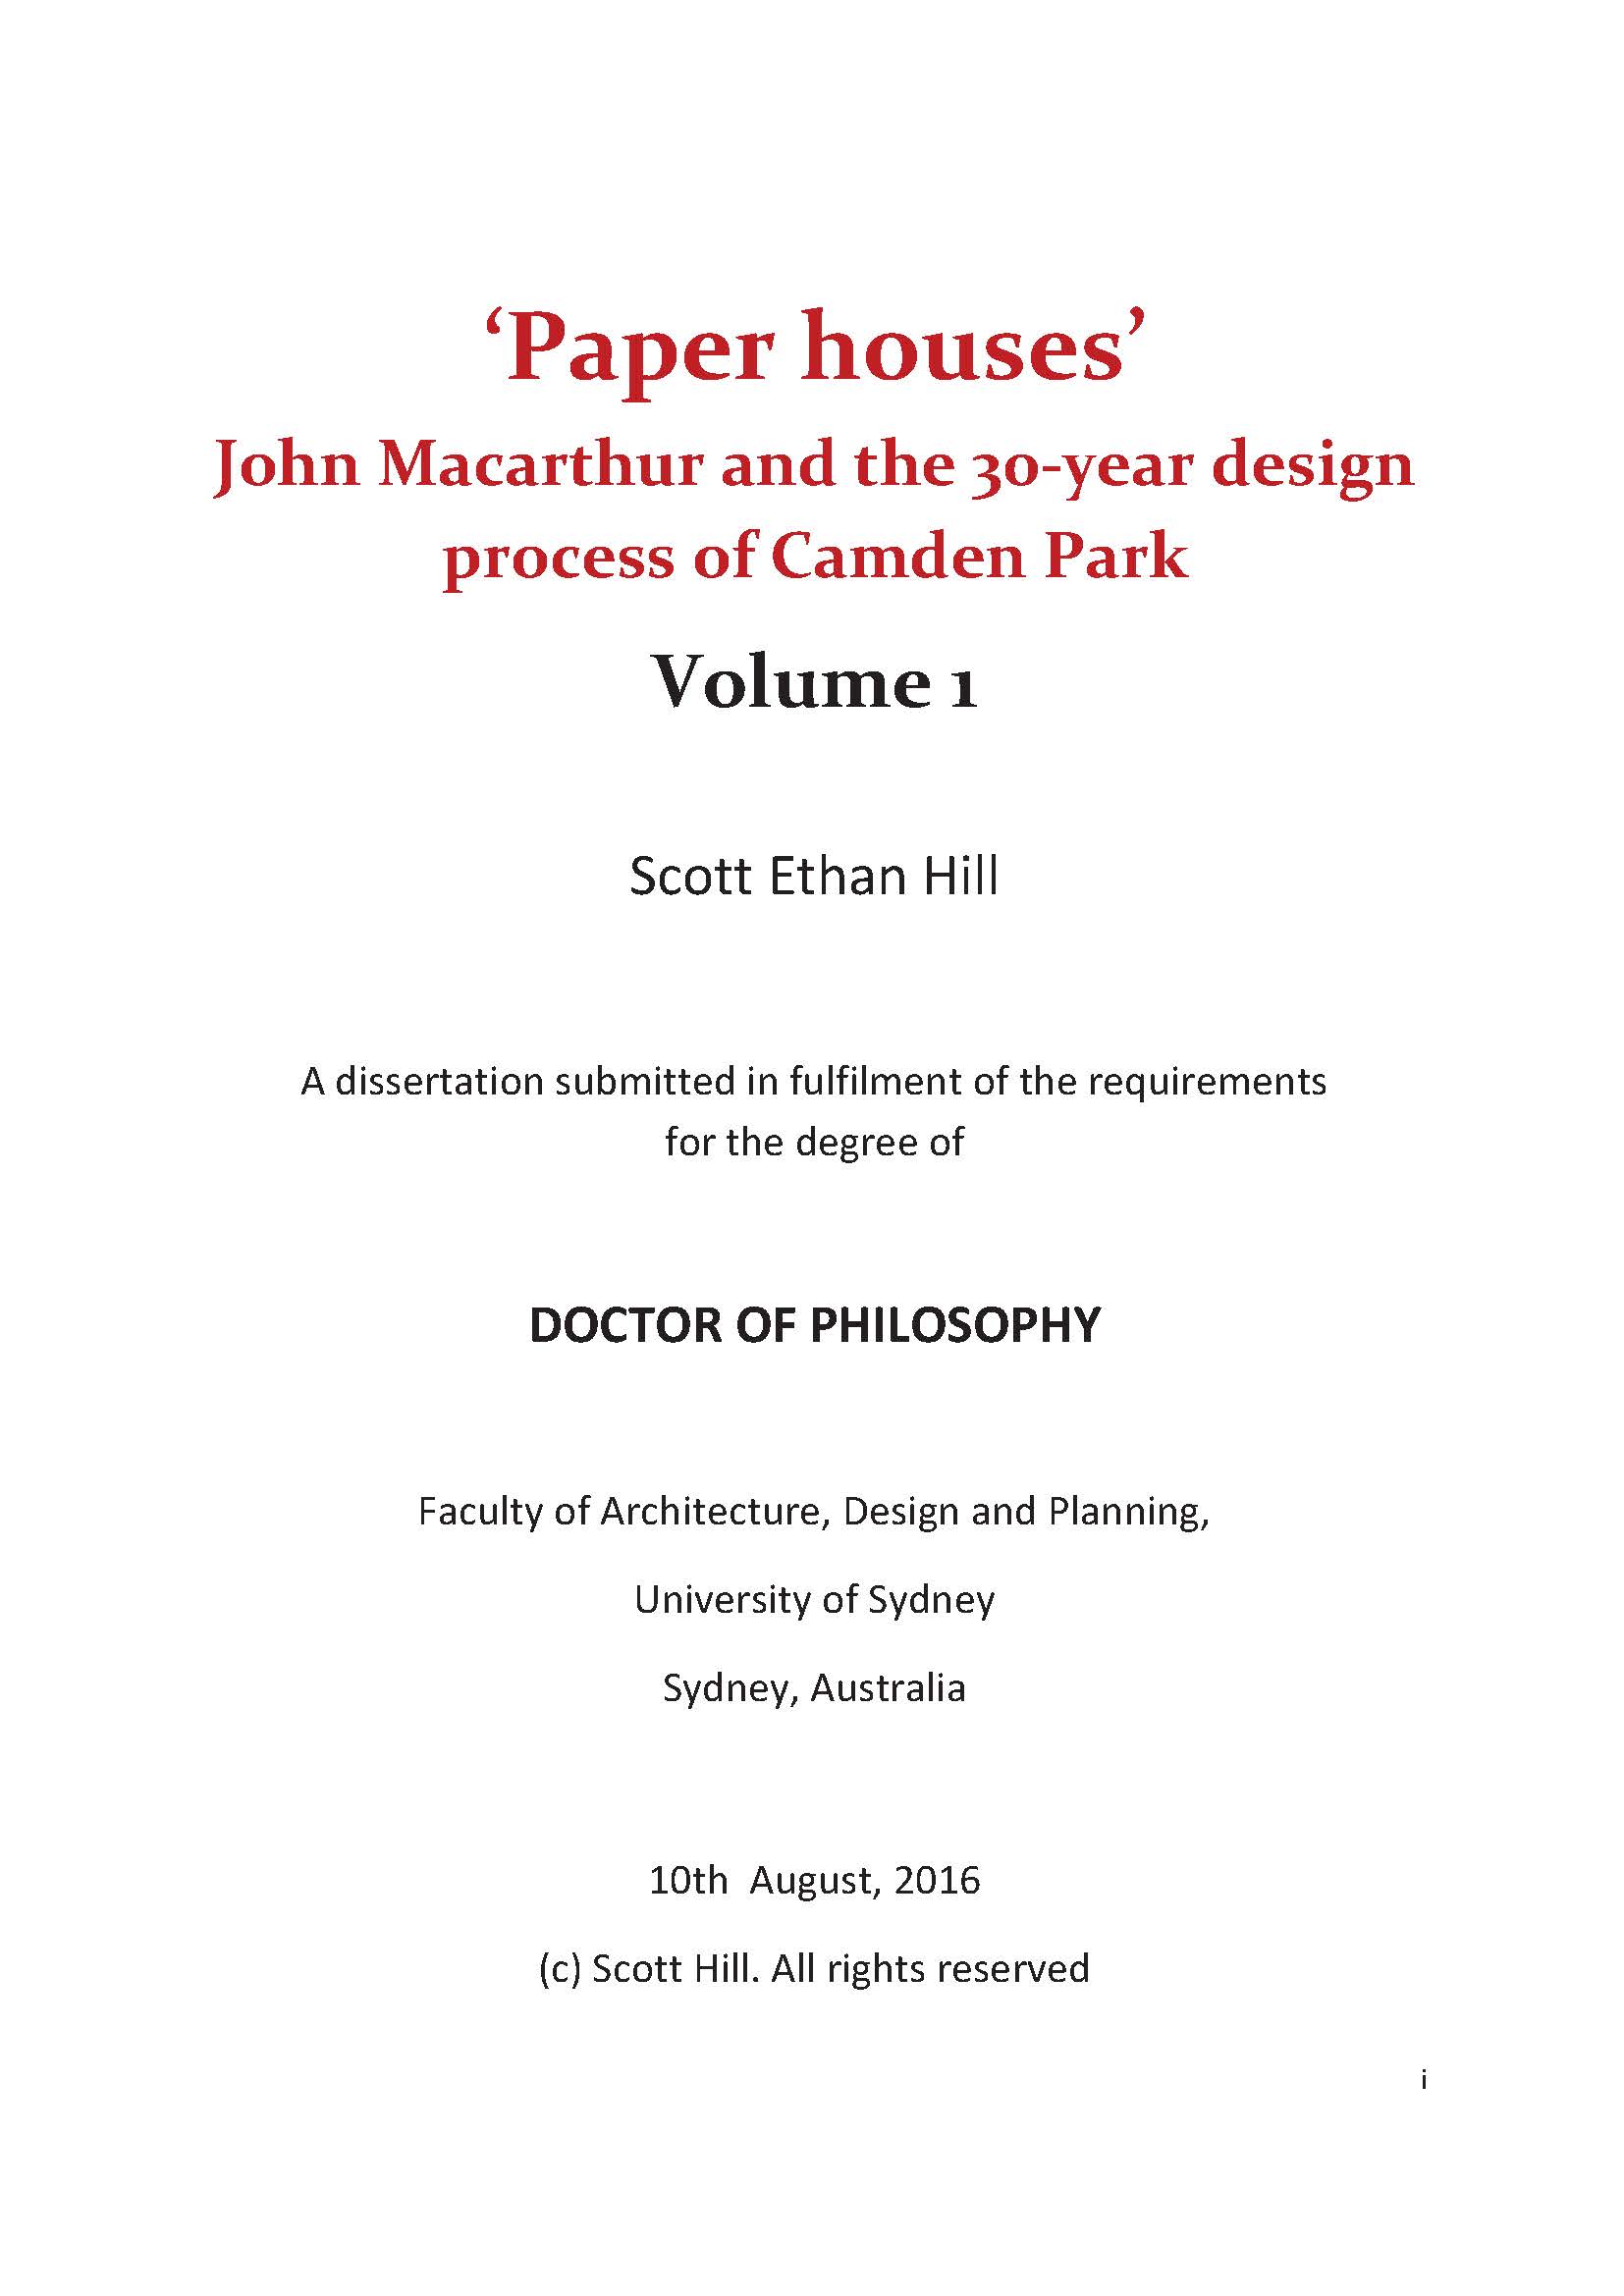 'Paper houses - Part 1